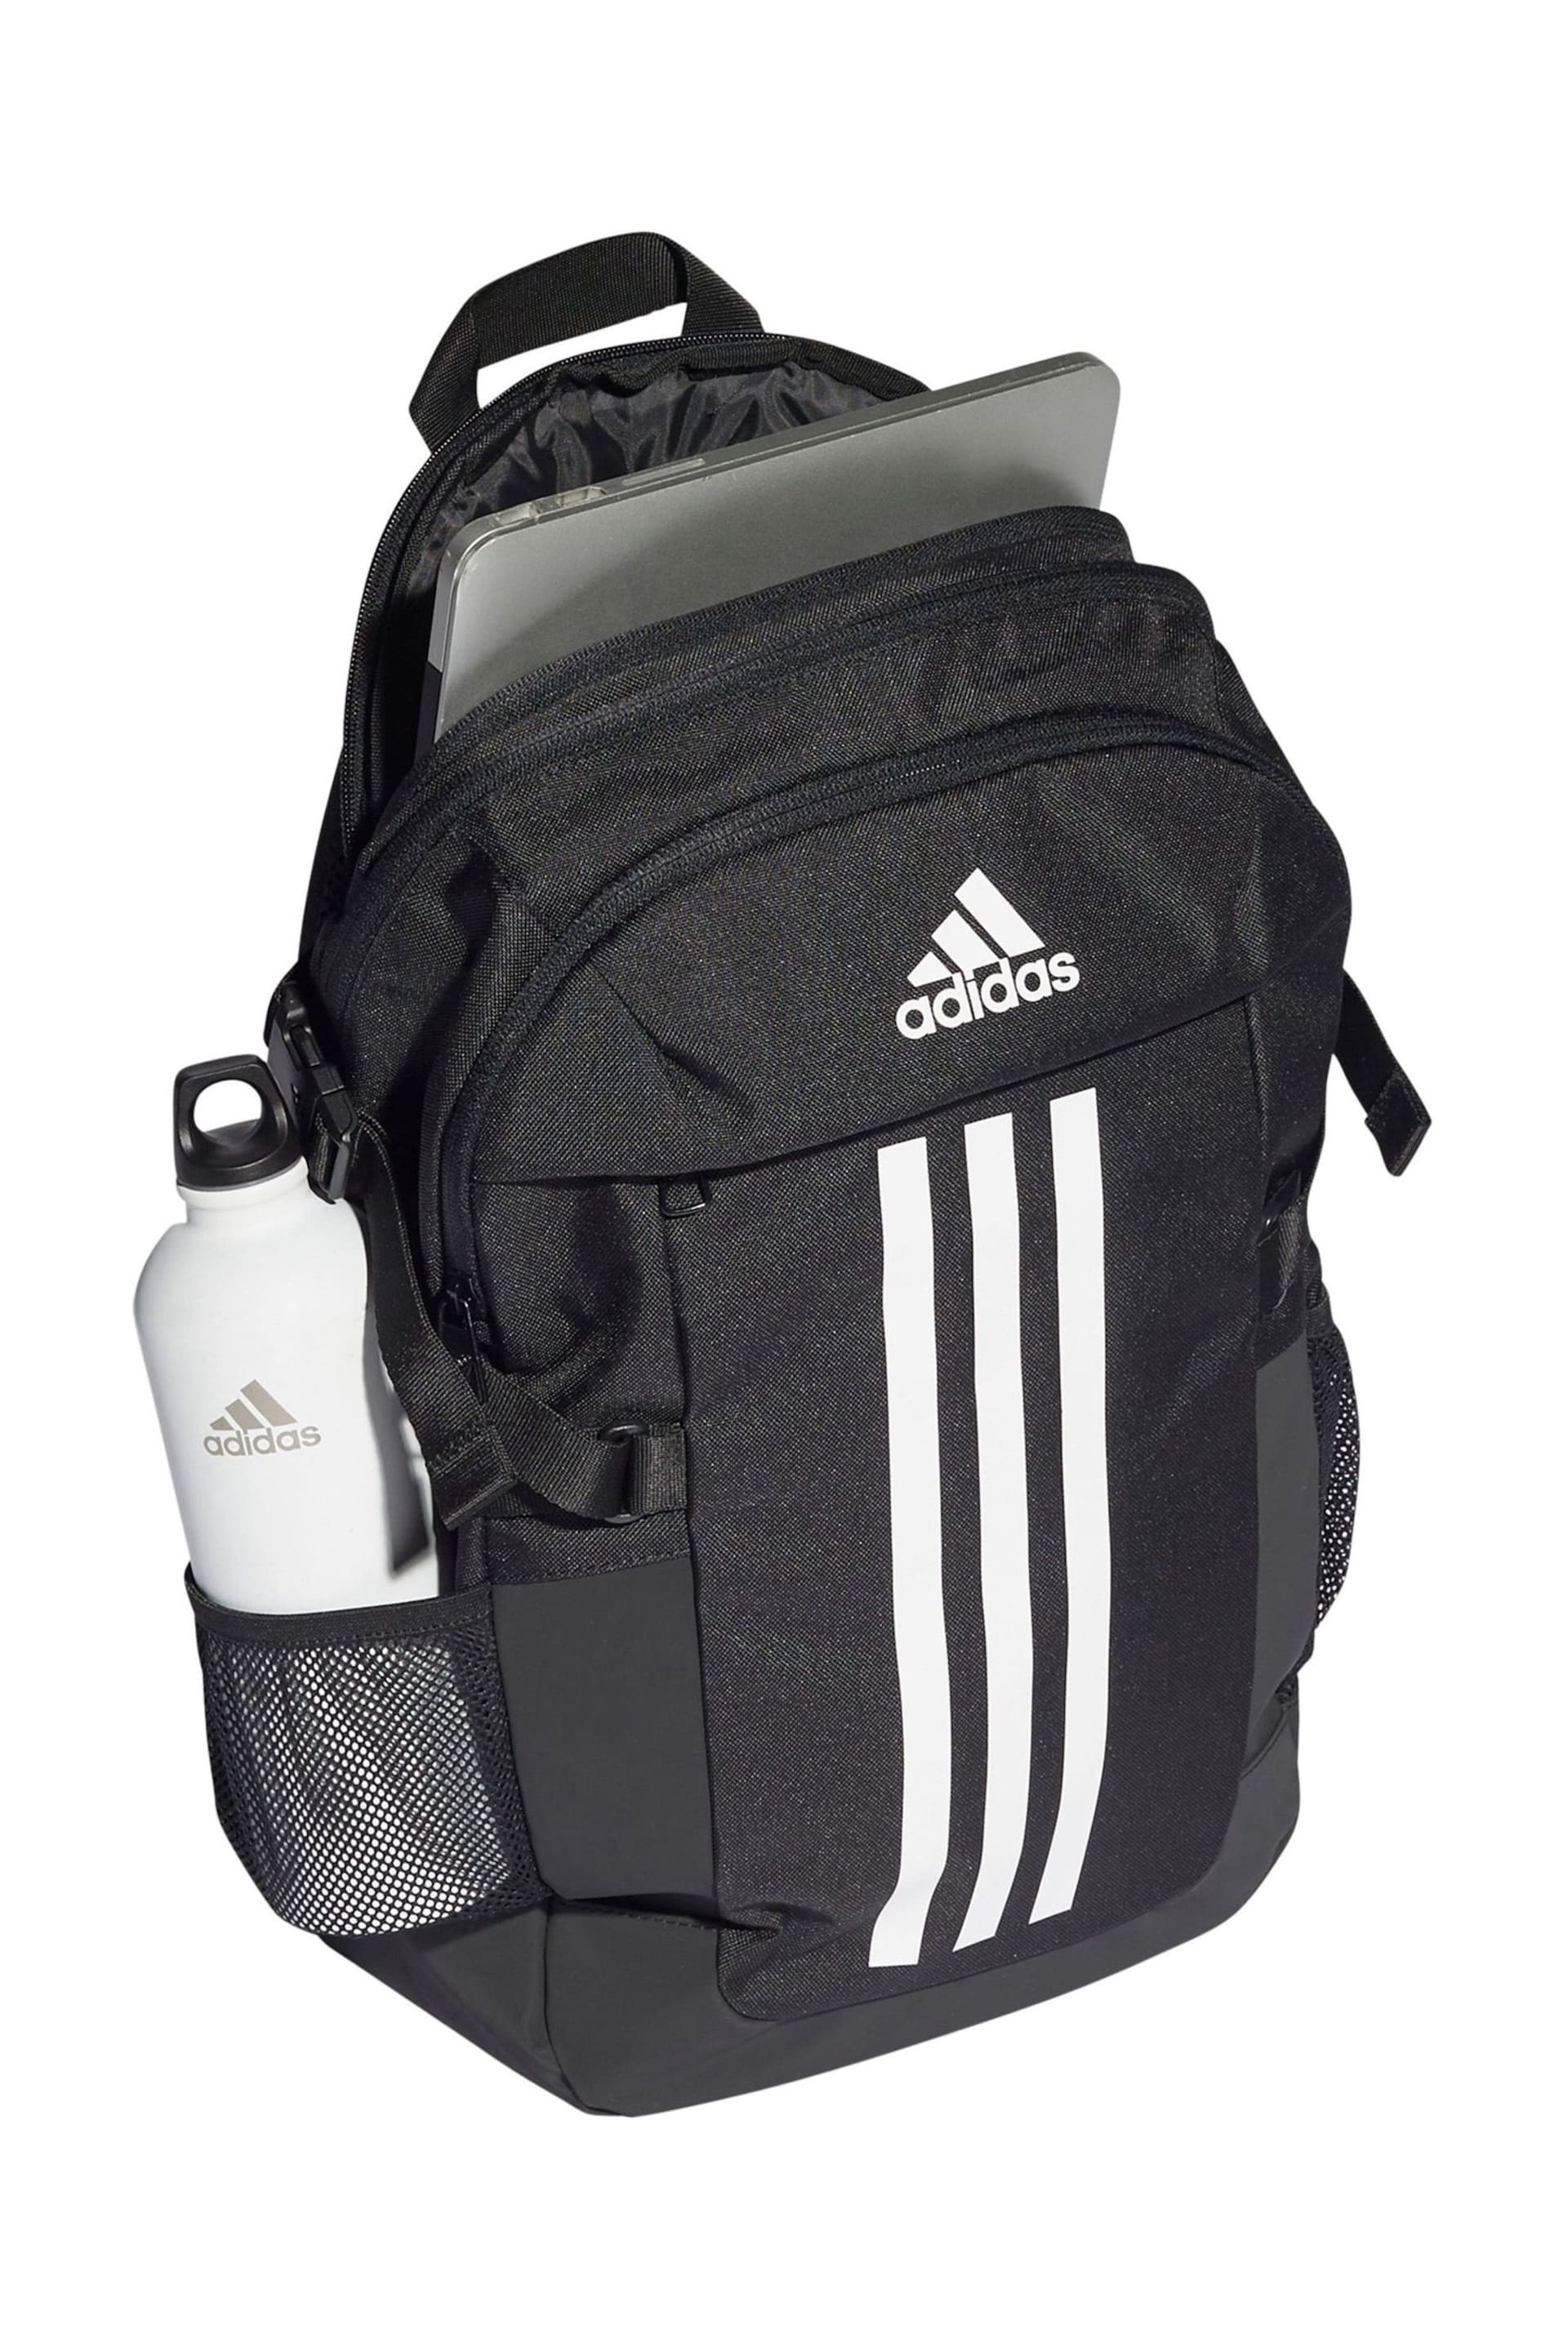 adidas Black/White Power Backpack - Image 4 of 6